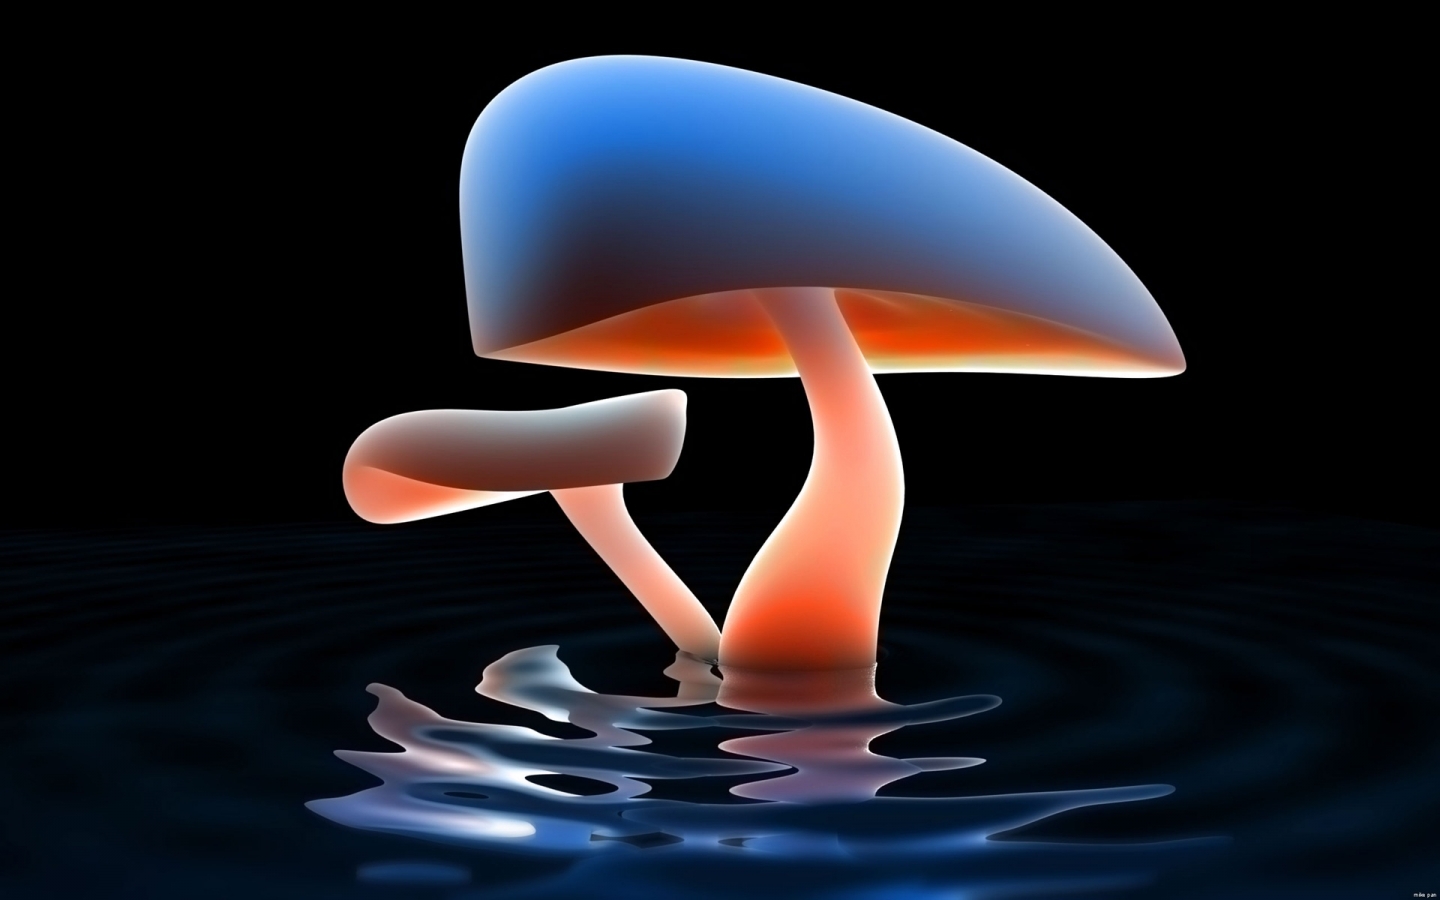 Mushroom Lake for 1440 x 900 widescreen resolution